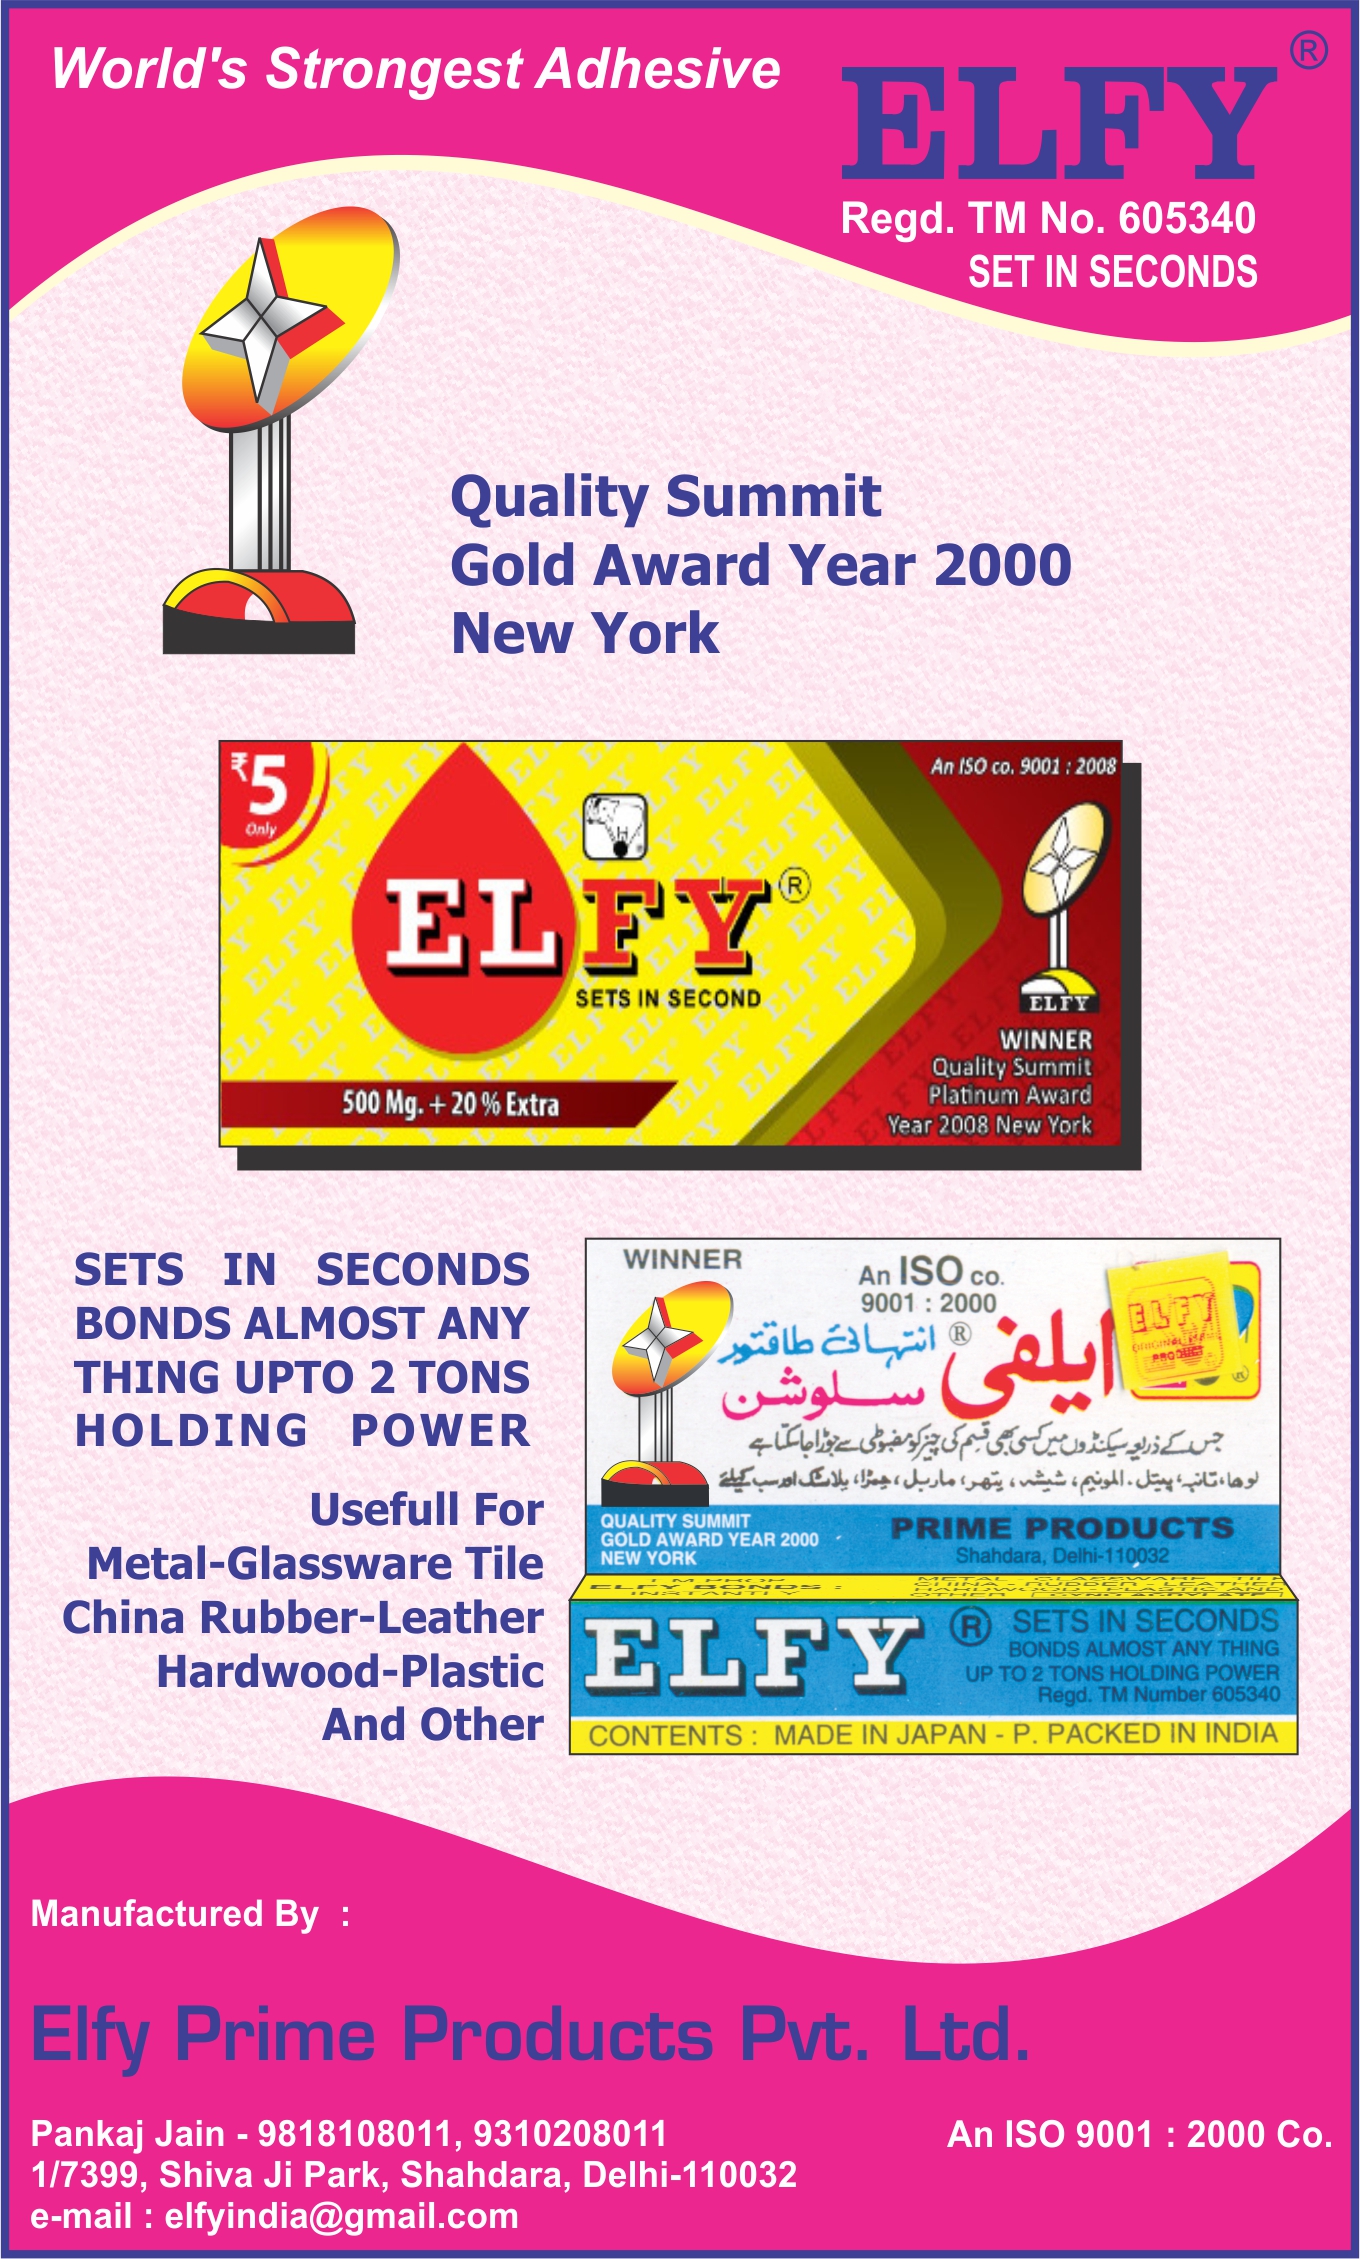 Elfy Prime Products Pvt Ltd